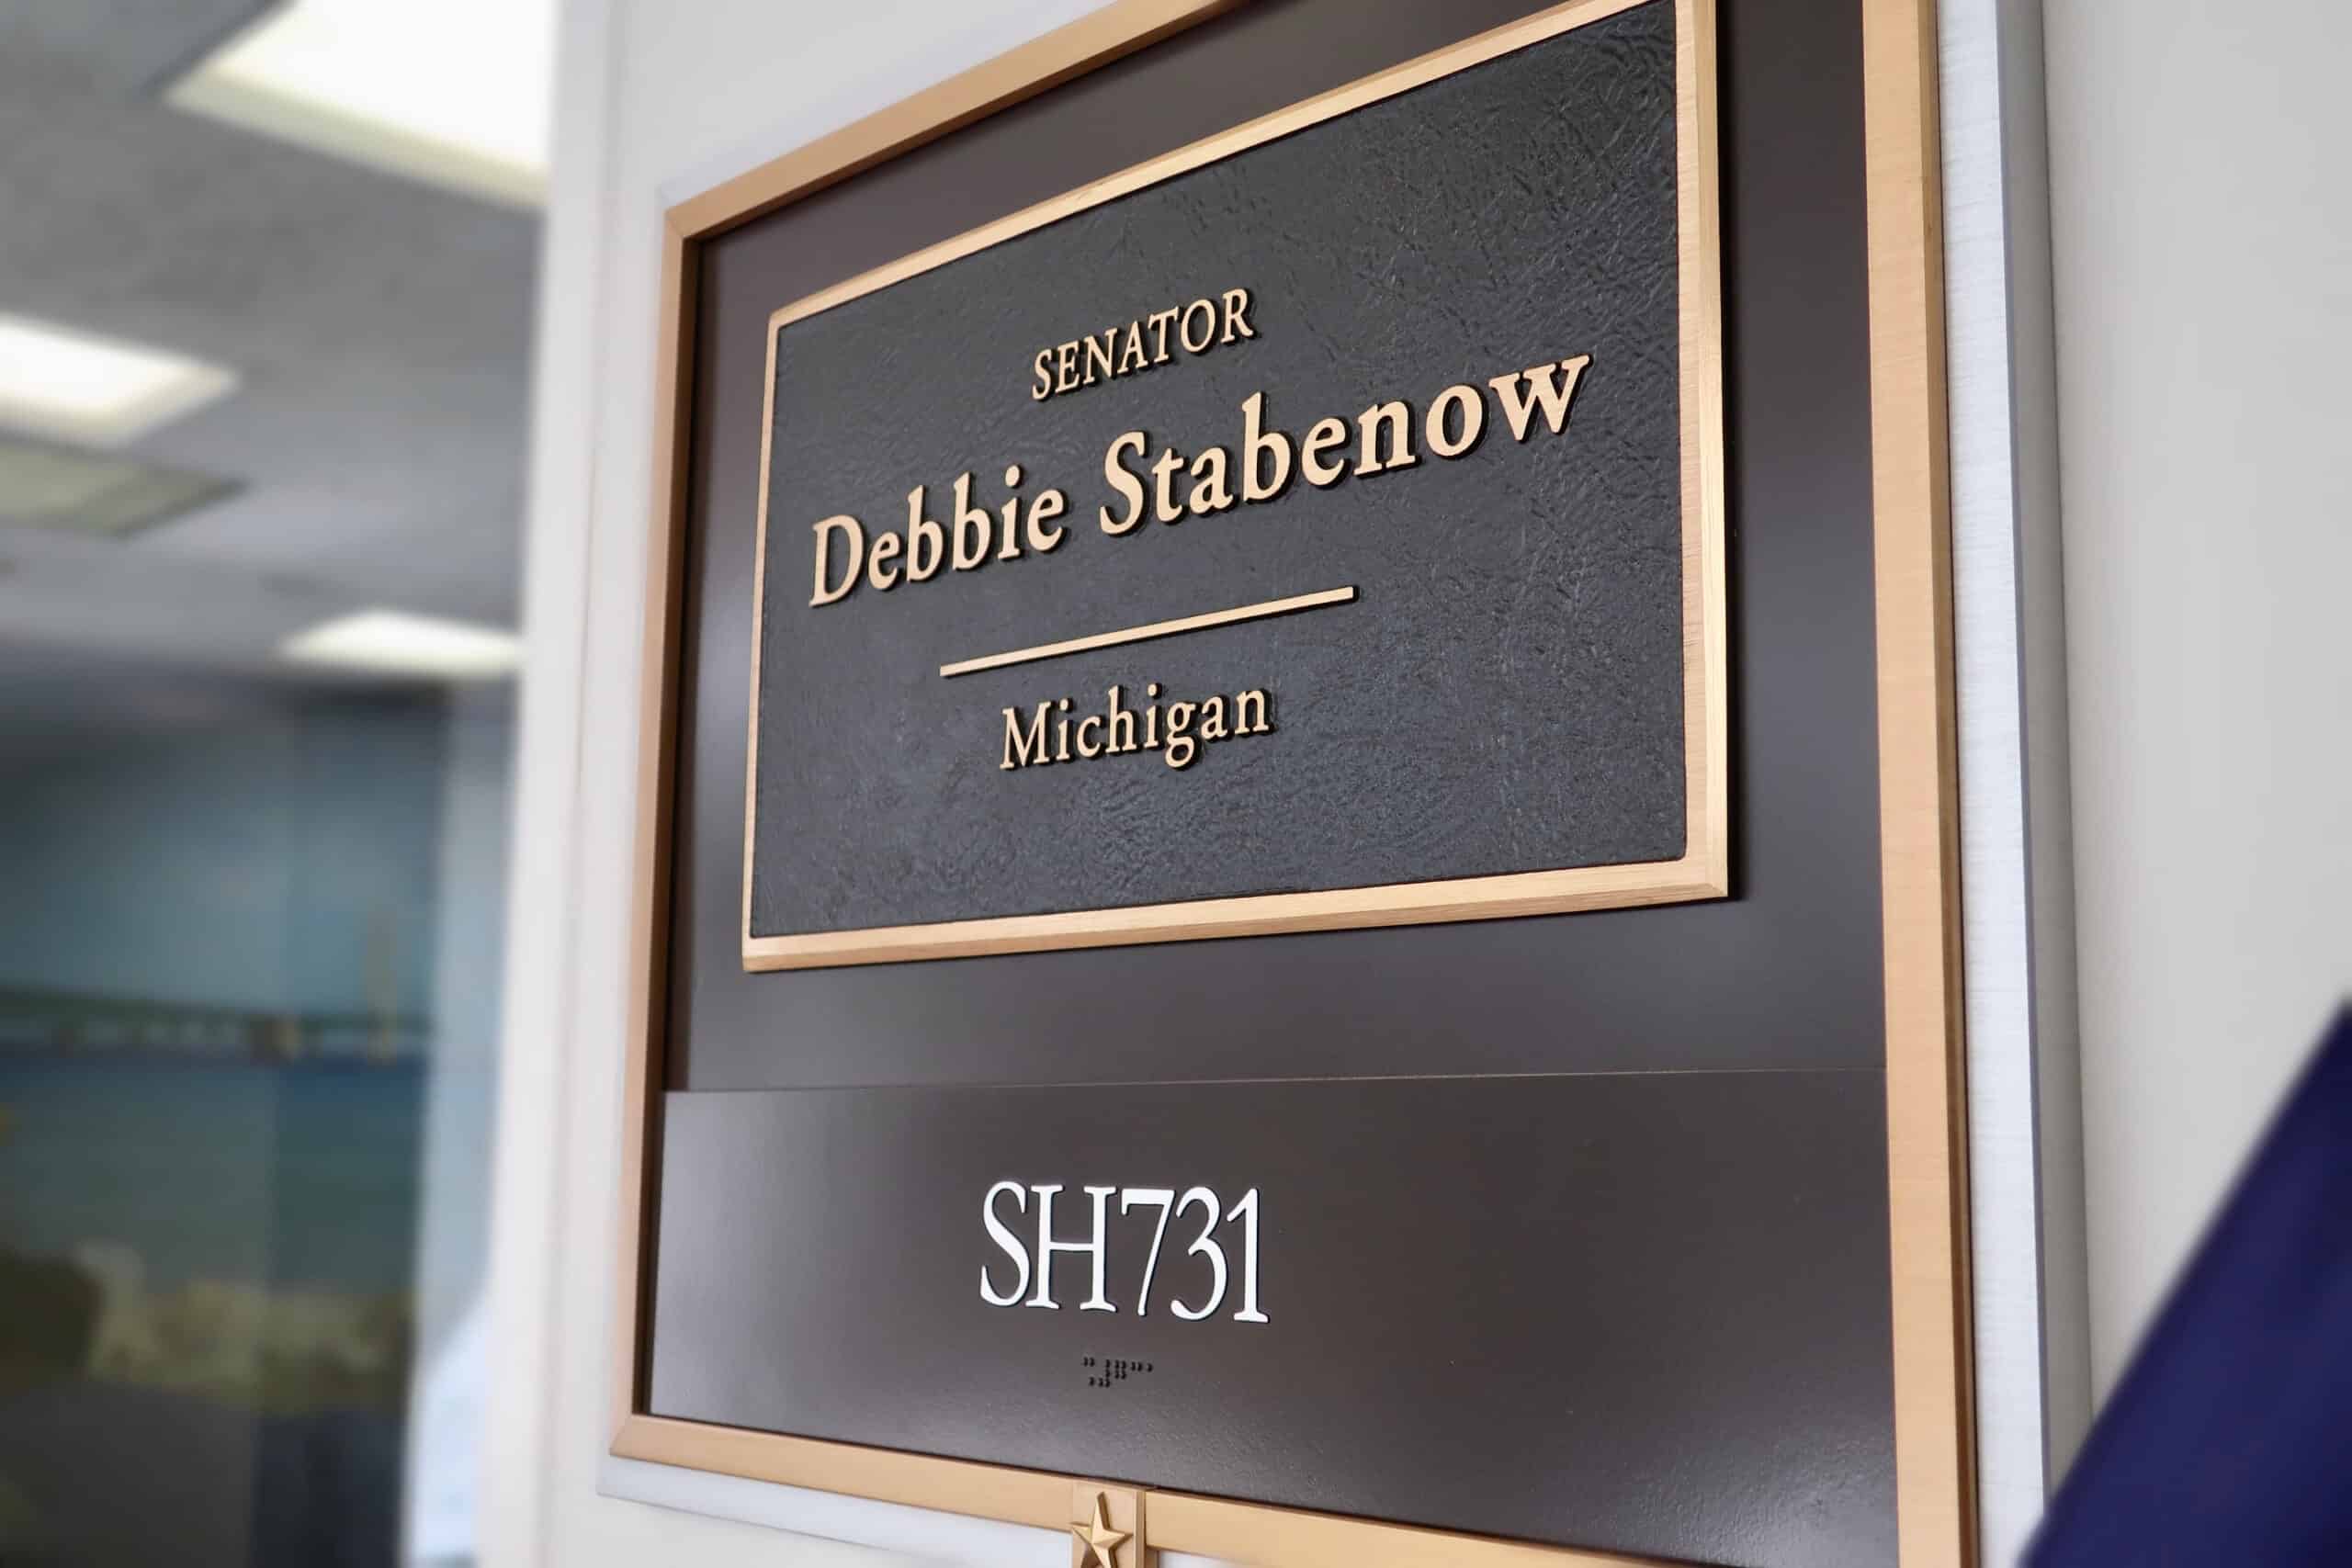 U.S. Senator Debbie Stabenow's office sign